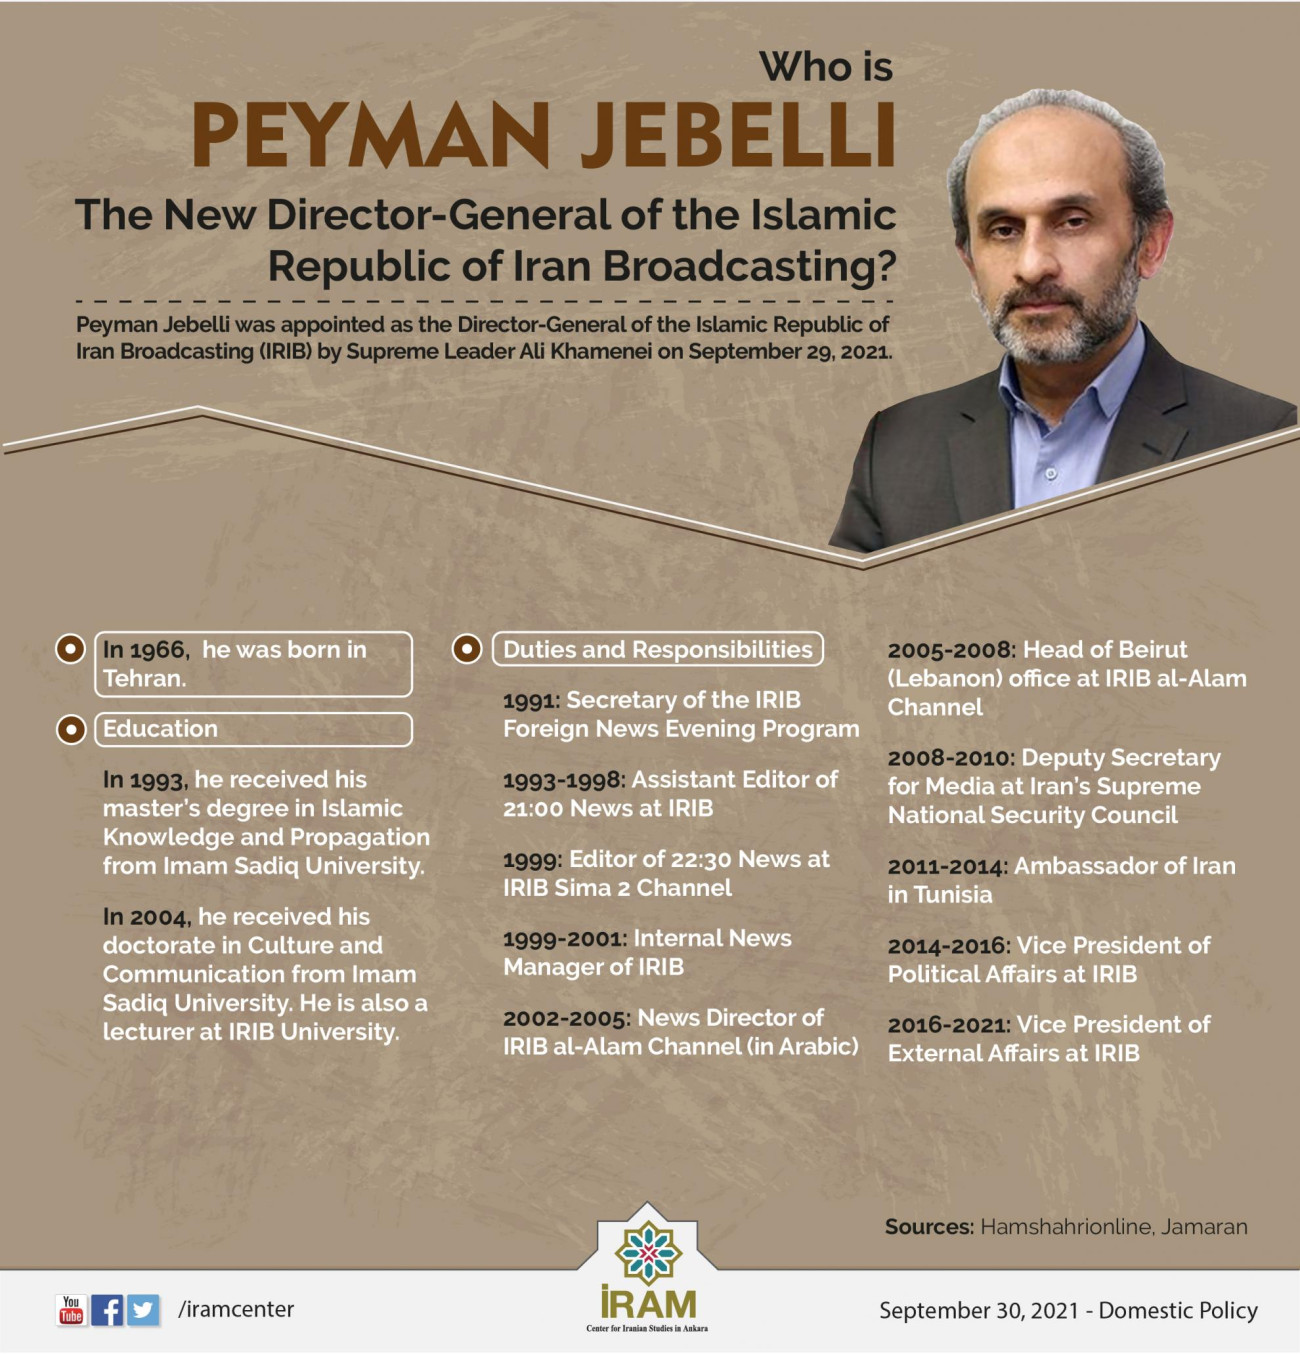 Who is Peyman Jebelli?